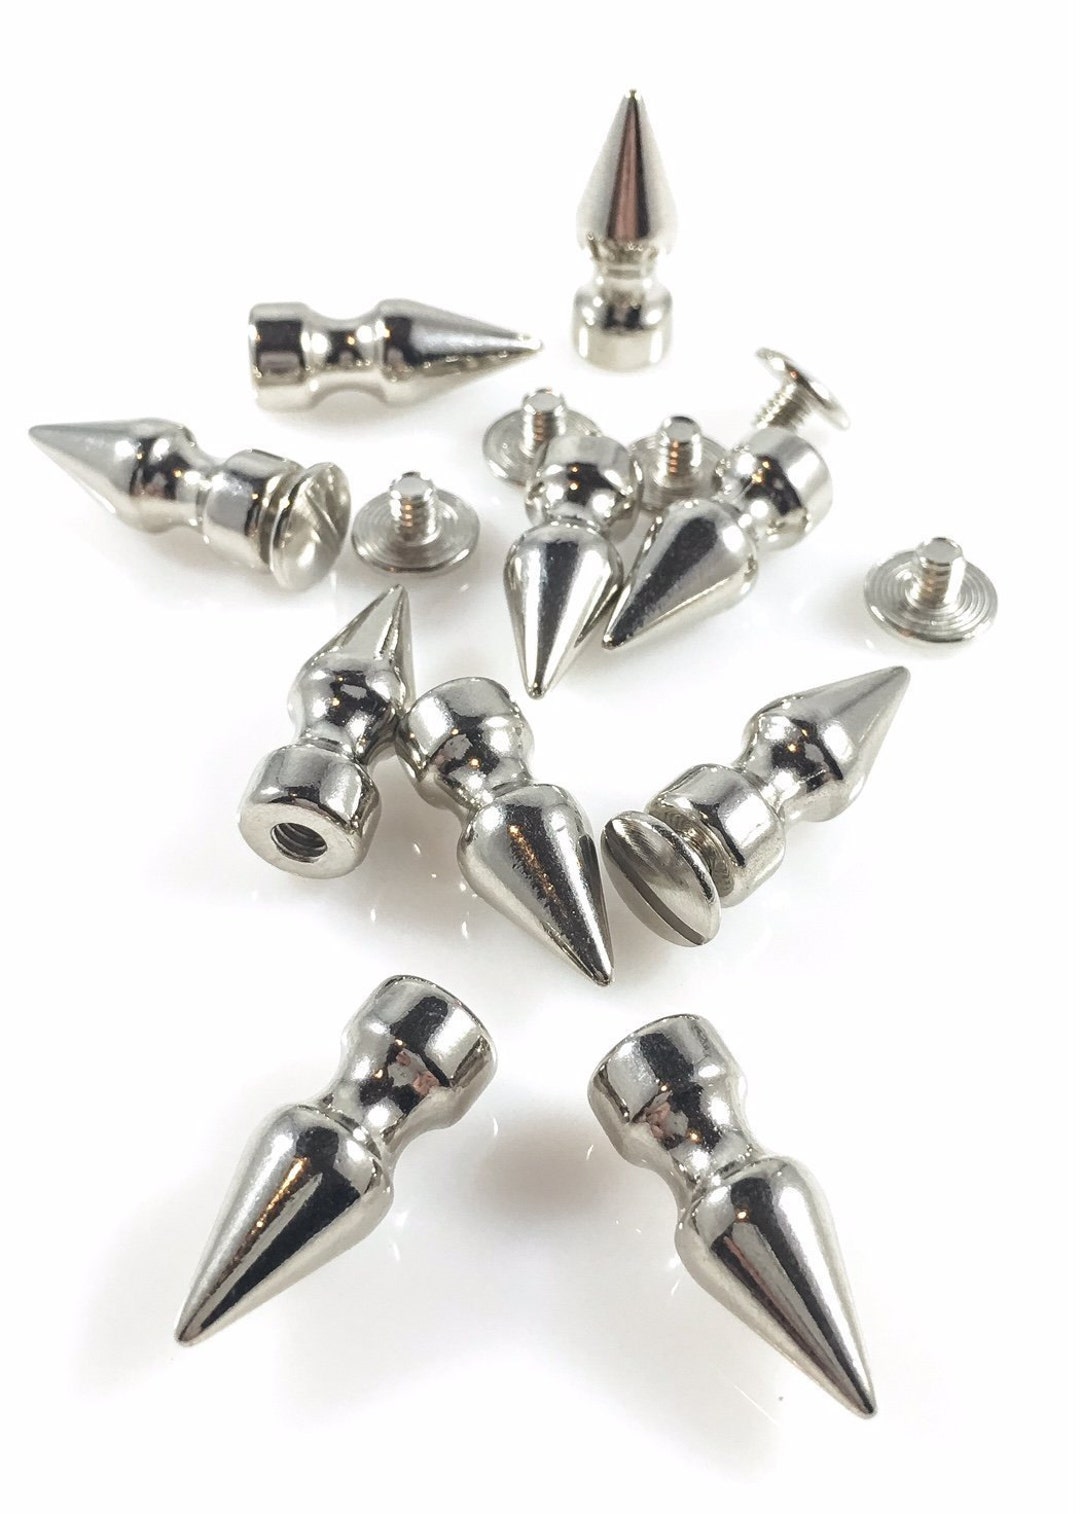 100pcs DIY cone studs cone spike studs beads 7*9mm Metal